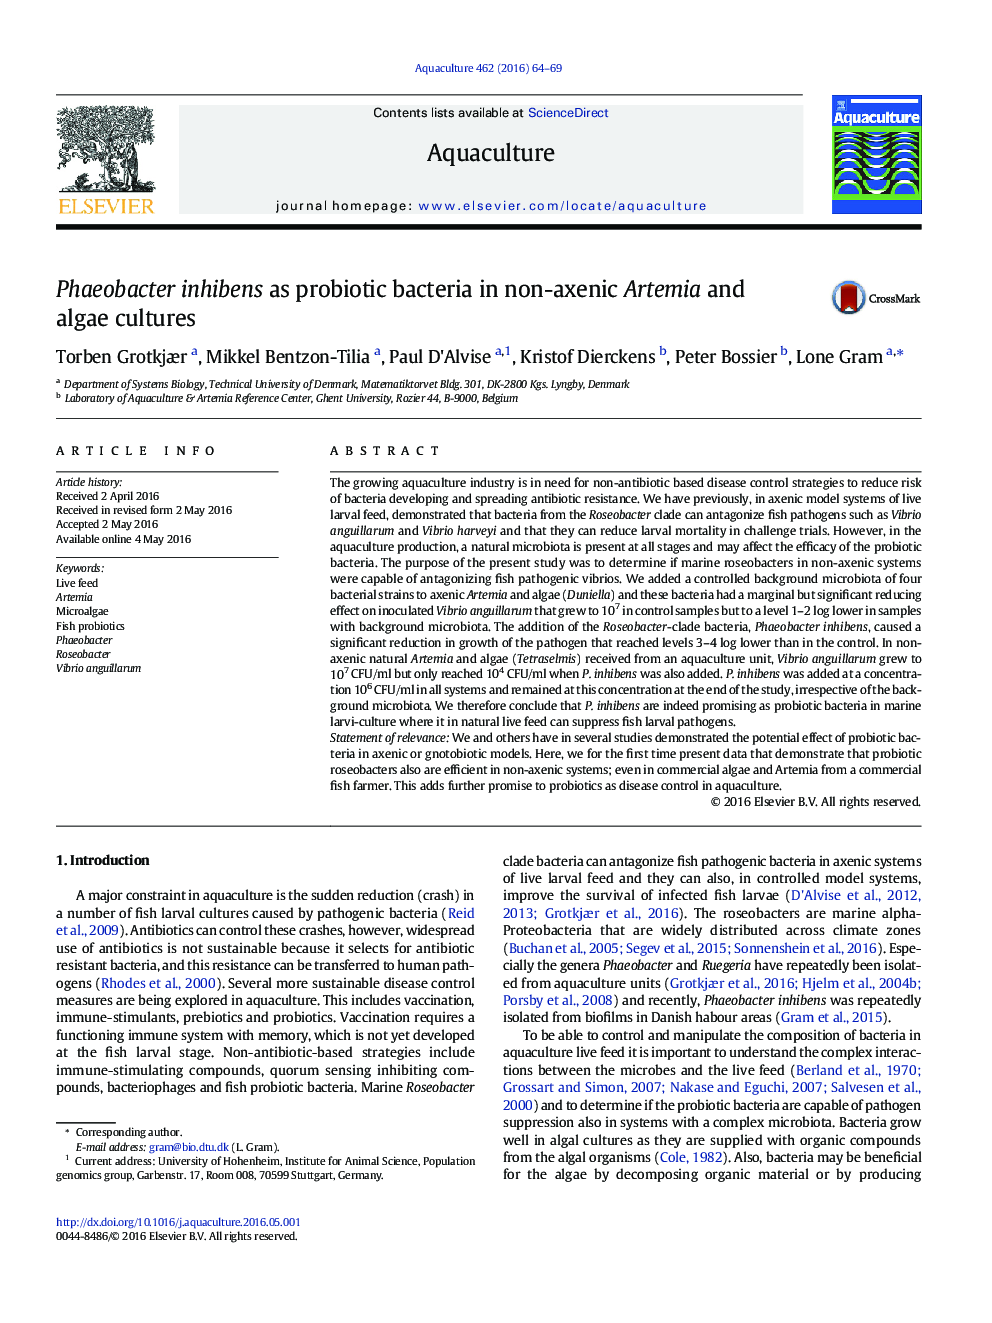 Phaeobacter inhibens as probiotic bacteria in non-axenic Artemia and algae cultures